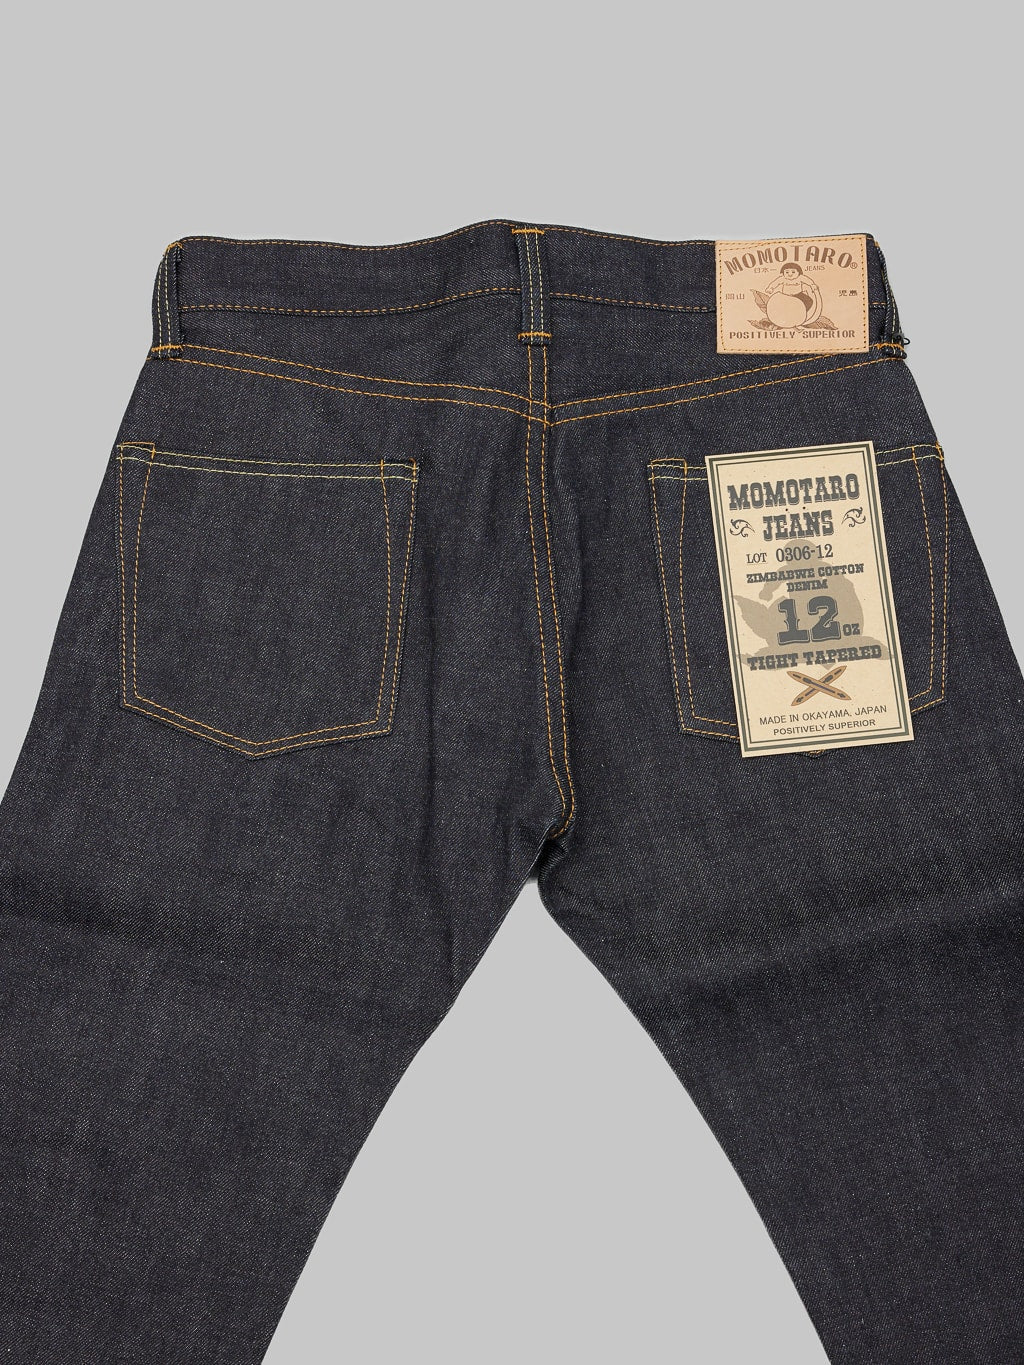 momotaro jeans 0306 12 12oz selvedge denim tight tapered back pockets